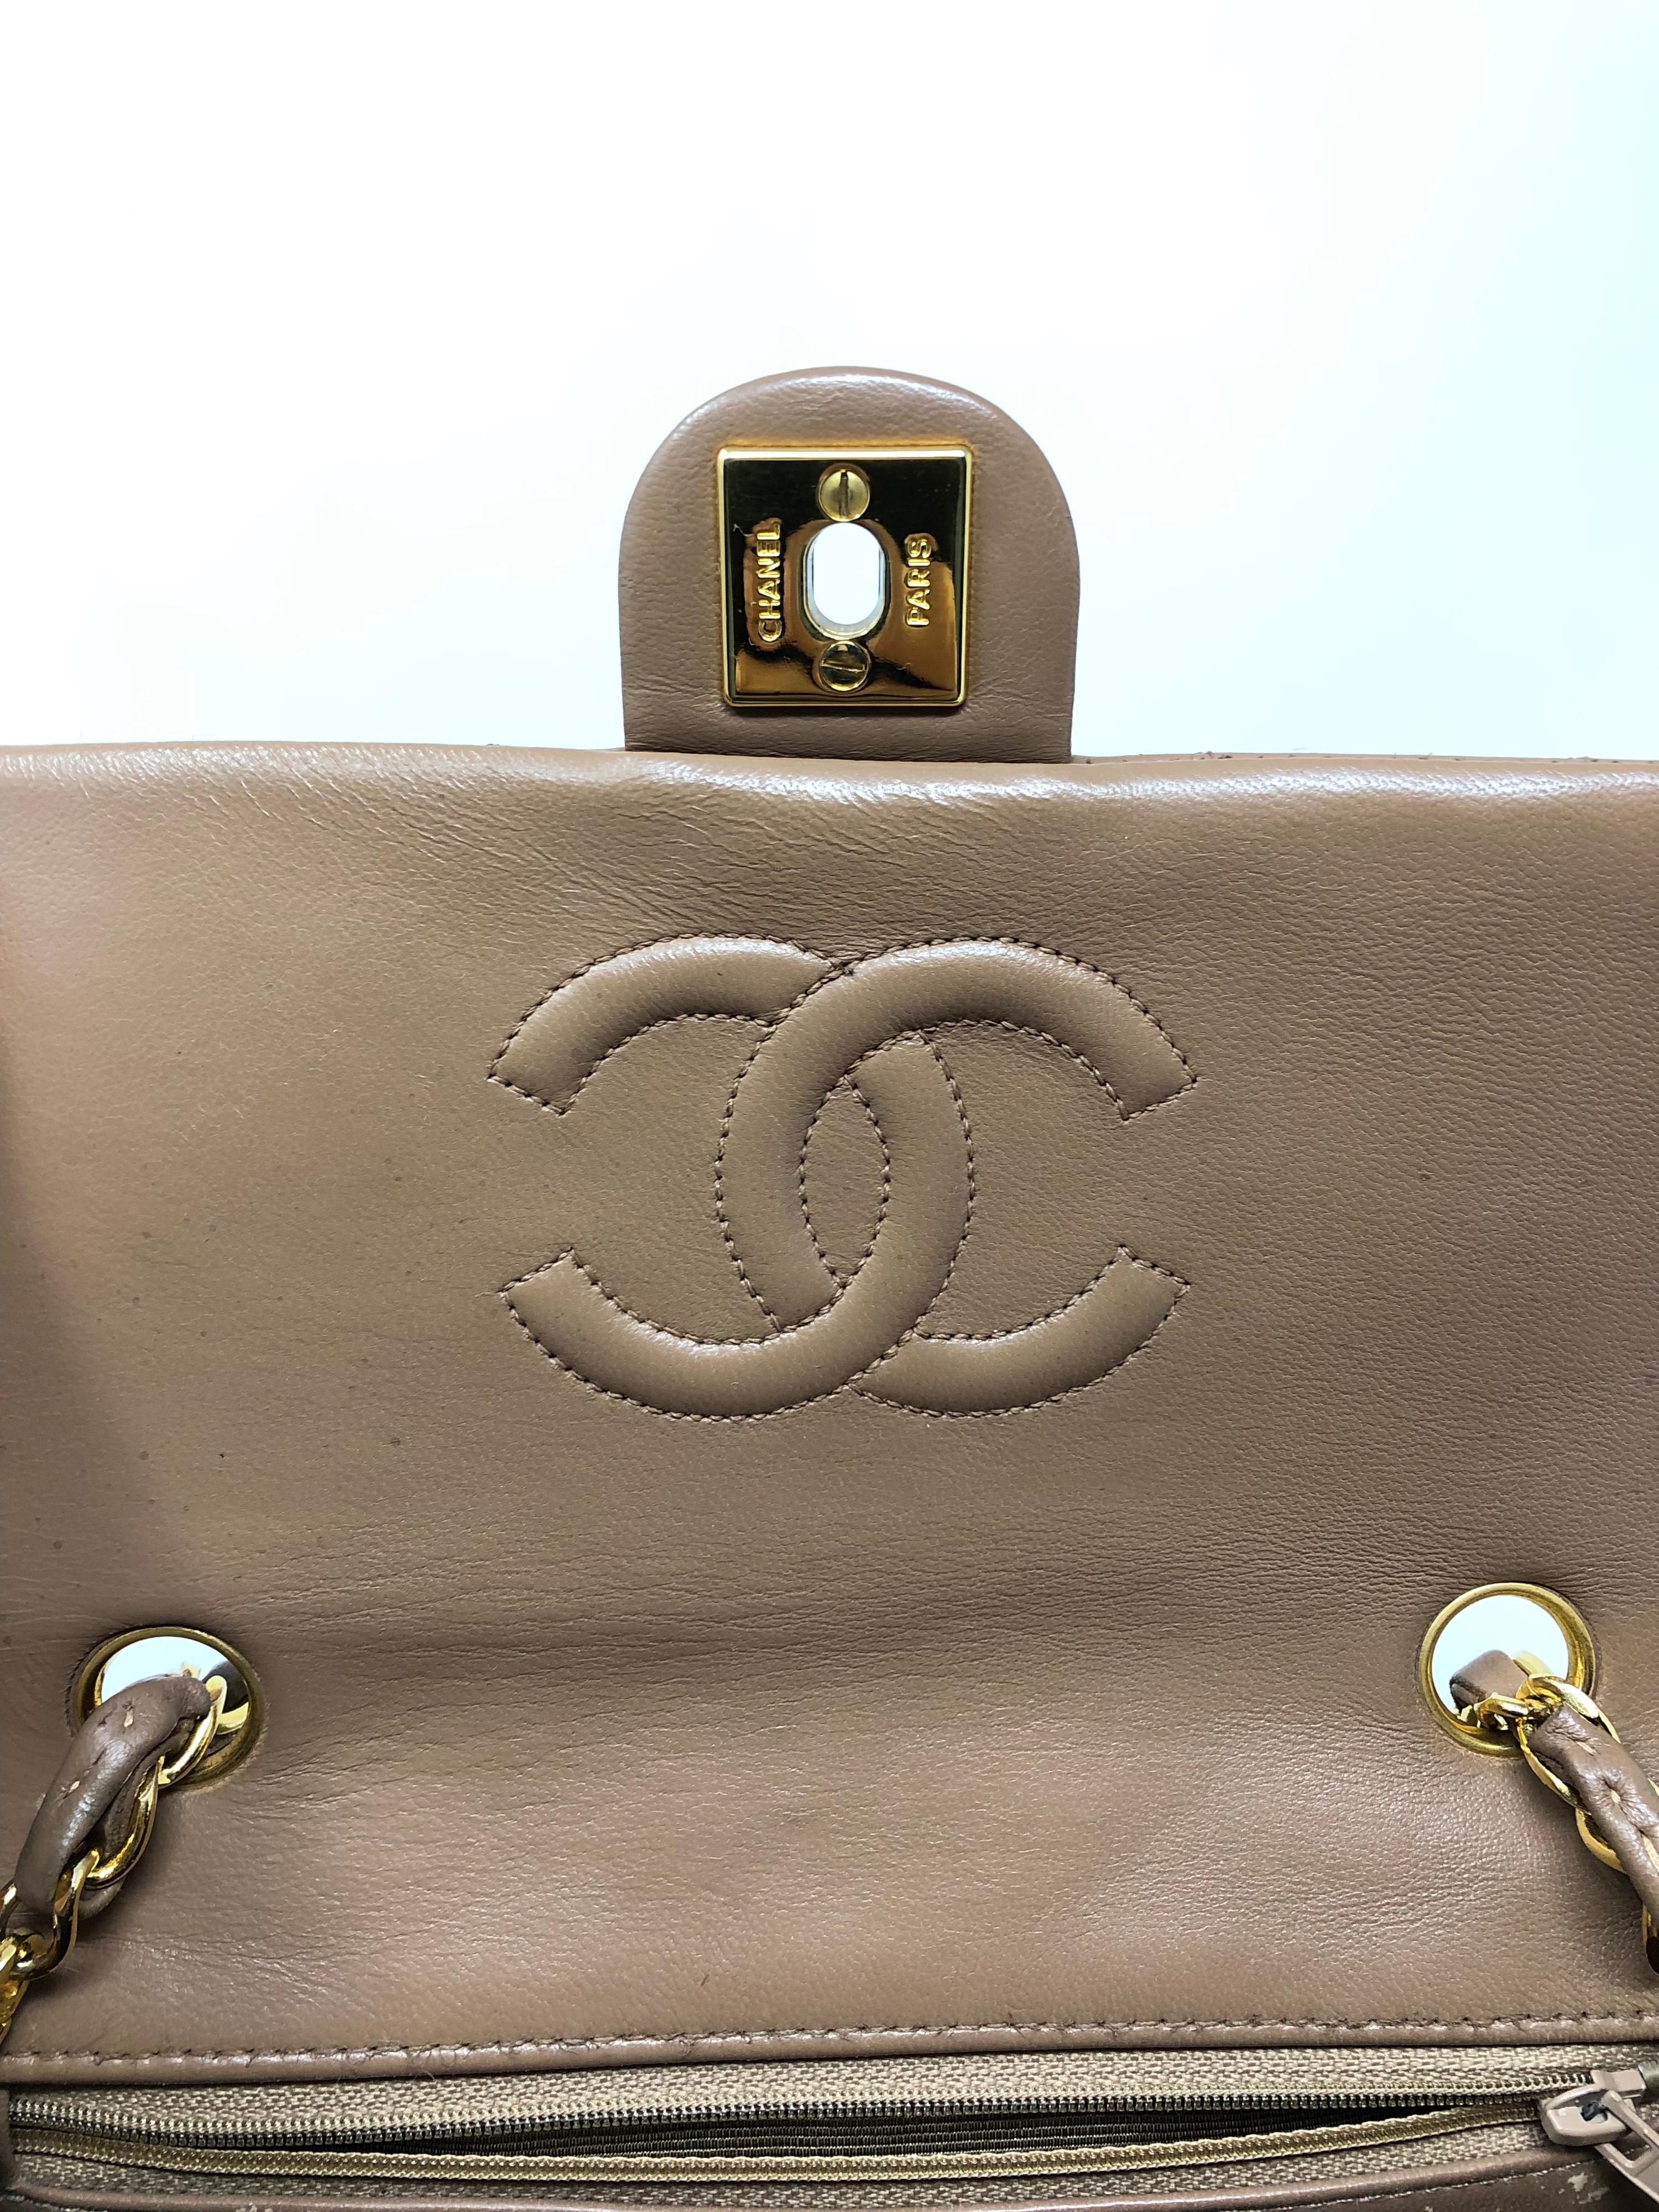 Chanel Tan Quilted Leather Shoulder Bag 1989-1991 4